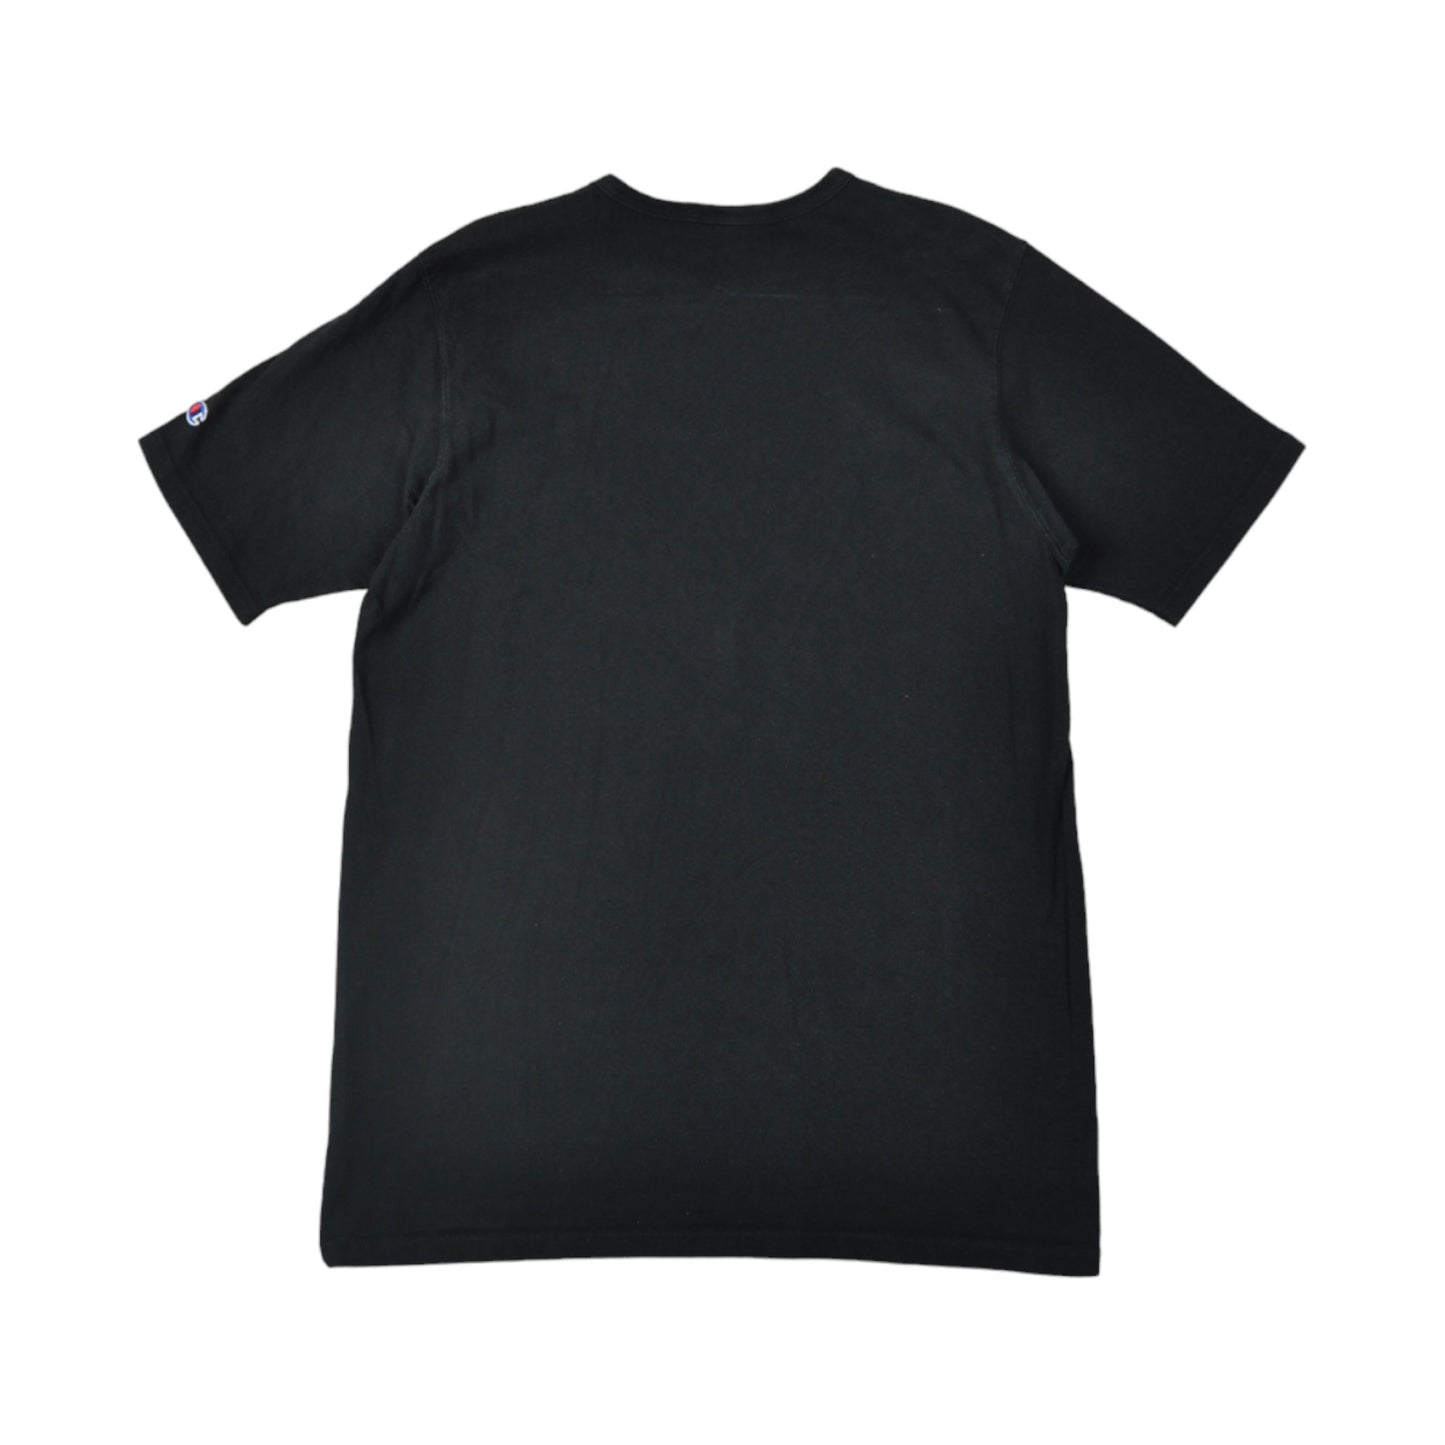 Vintage Champion Spell Out T-Shirt Black Medium